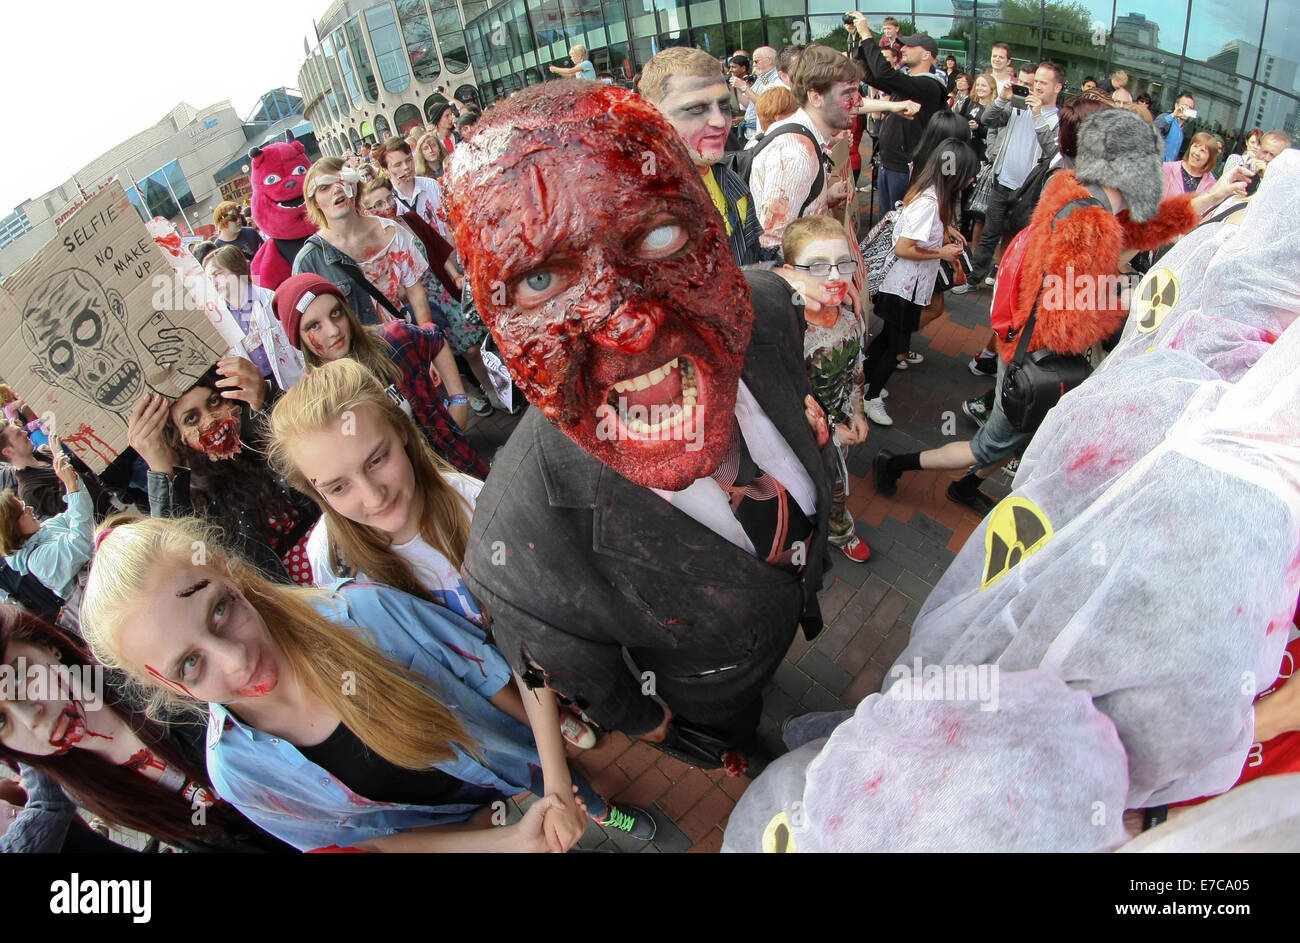 Menschen angezogen als Zombies, die Teilnahme an Birmingham Zombie Walk 2014 Stockfoto